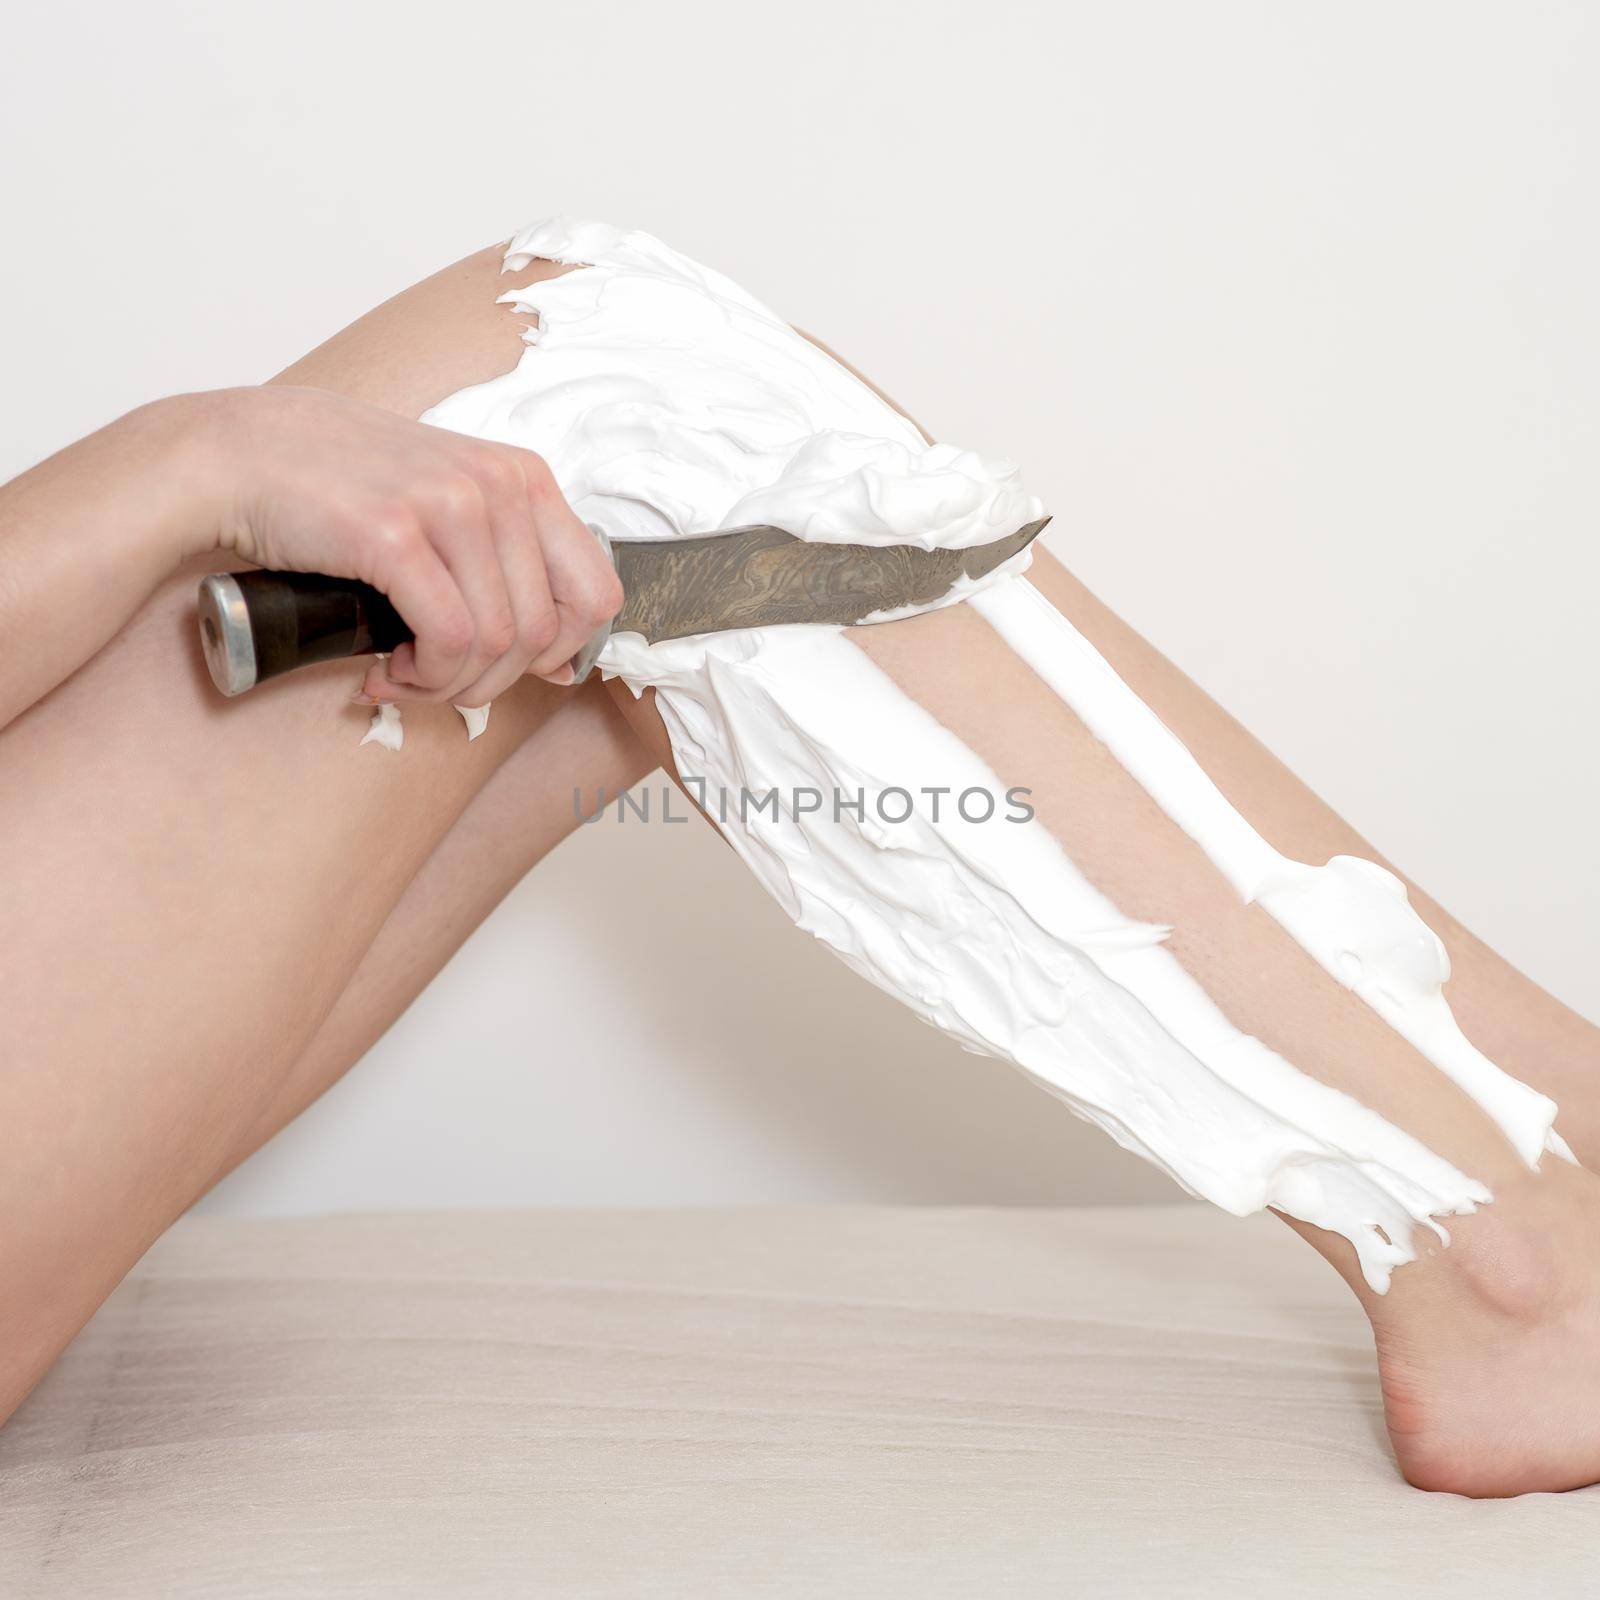 Legs of woman shaving by knife by okskukuruza